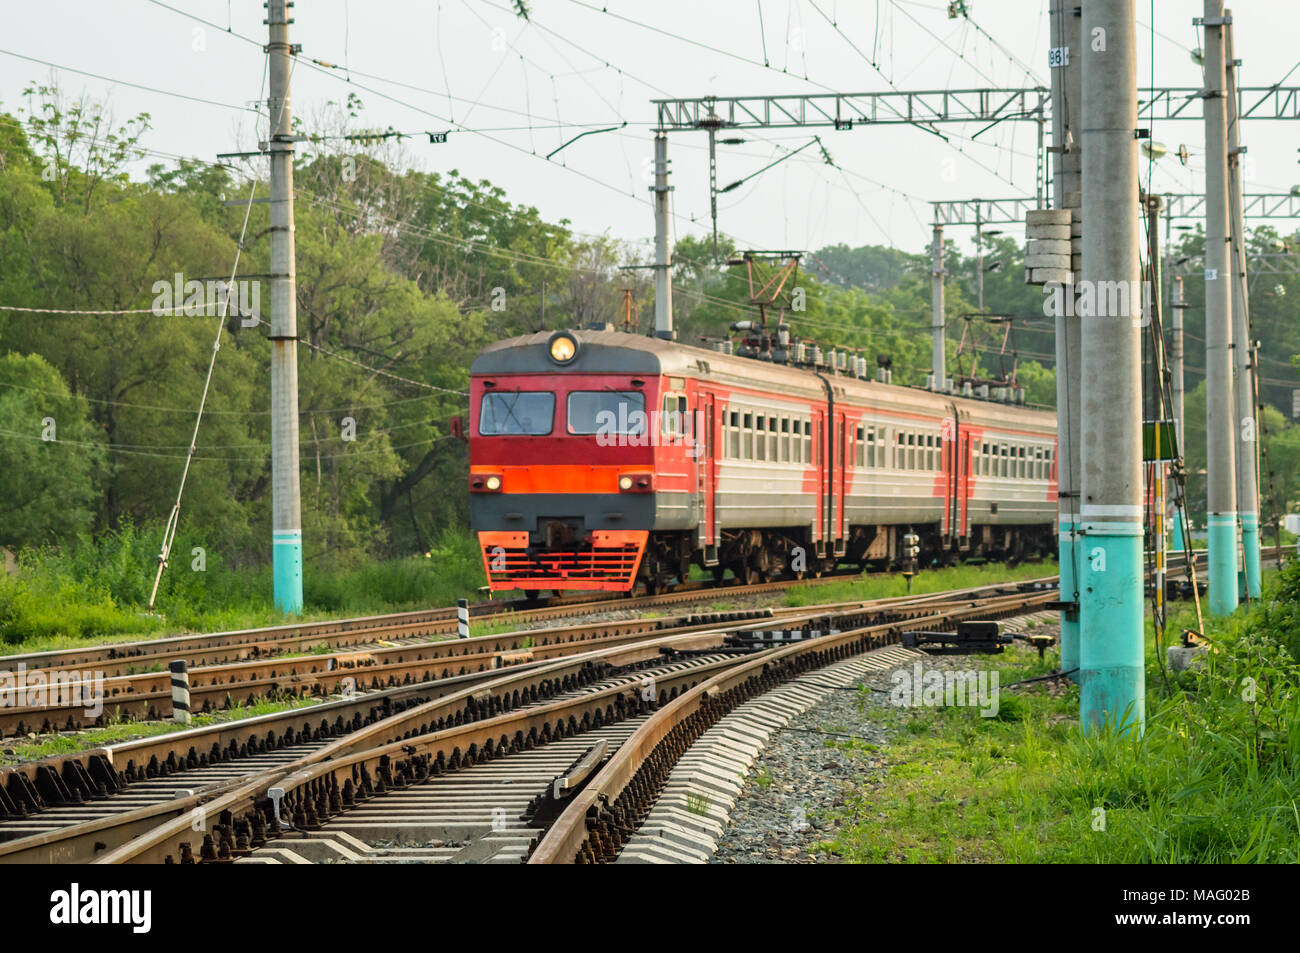 Tren Eléctrico de ferrocarriles rusos Foto de stock